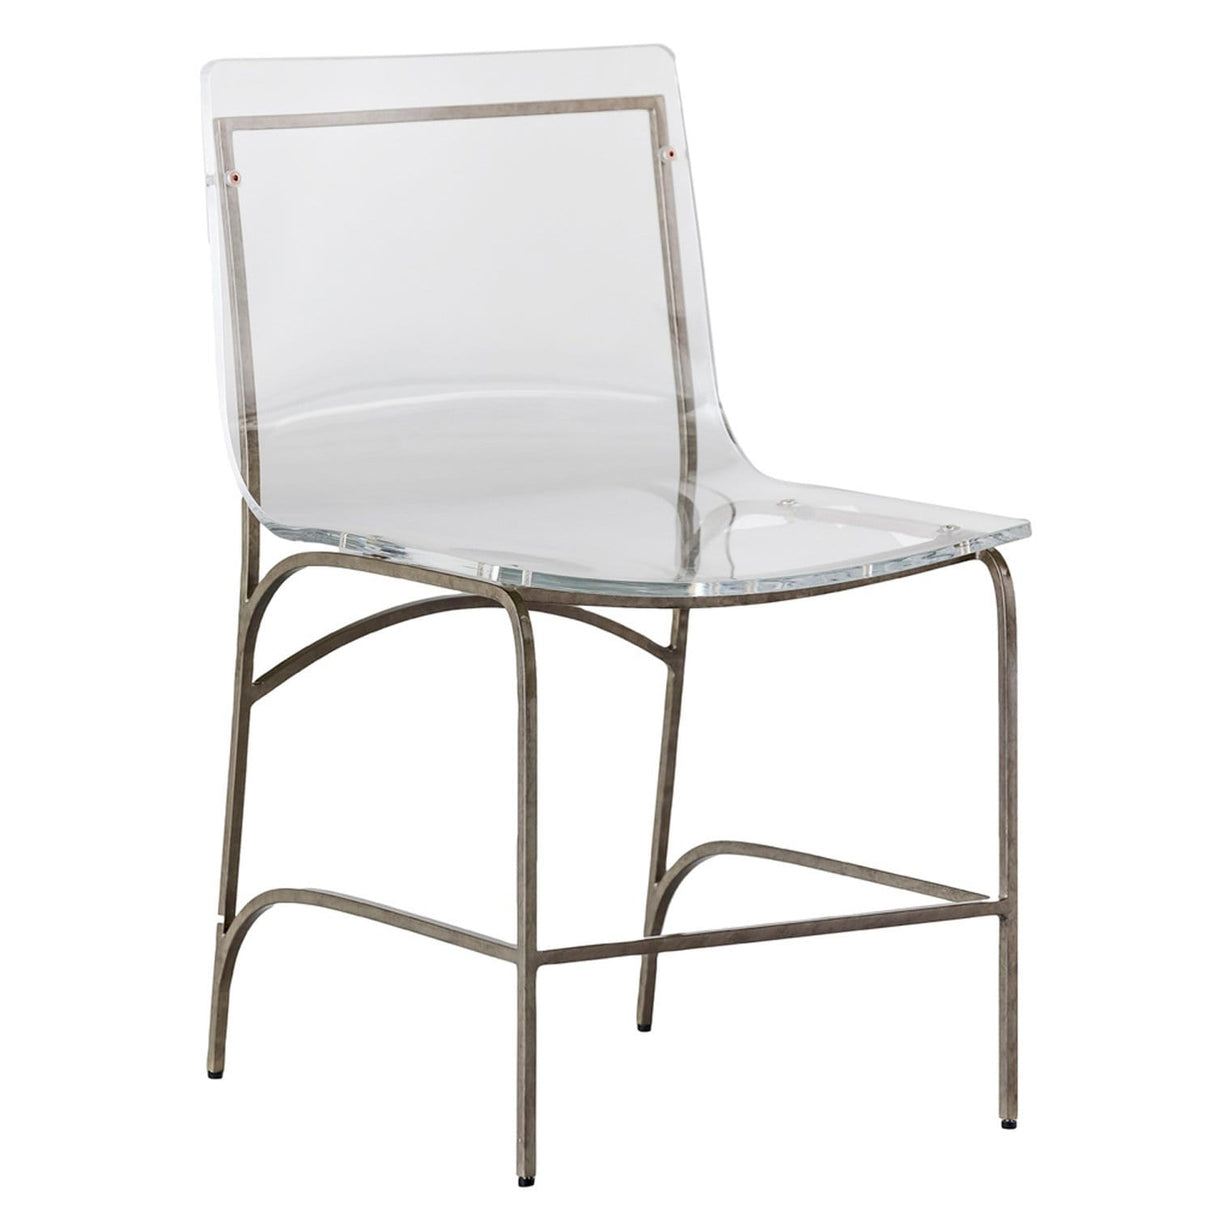 Gabby Penelope Dining Chair - Silver Furniture Gabby-SCH-151690 00842728100675